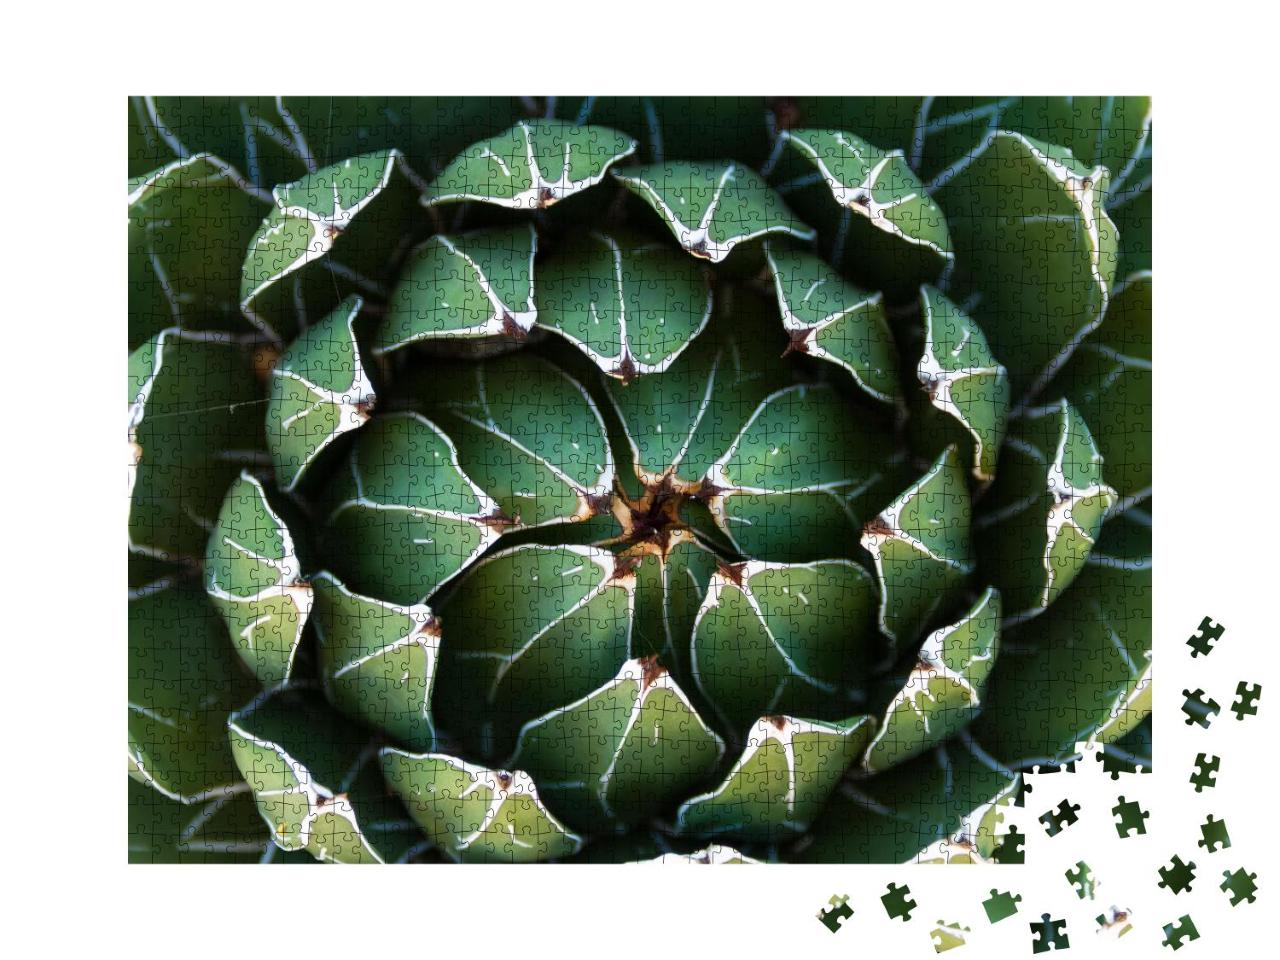 Puzzle 1000 Teile „Nahaufnahme eines blühenden Green Victoria Agave Kaktus“